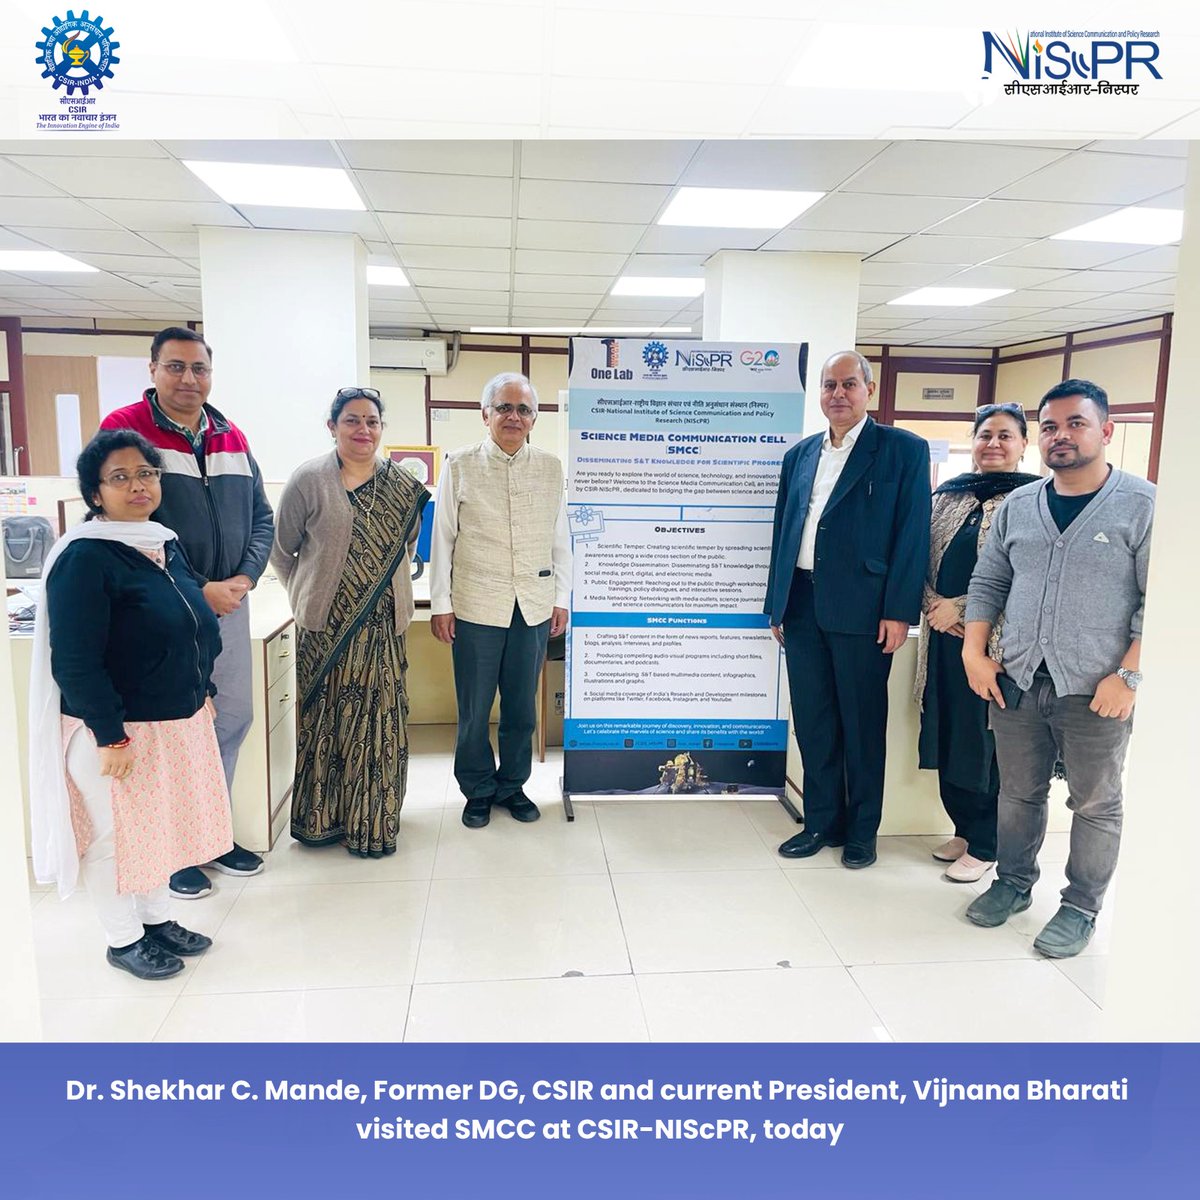 Dr. @shekhar_mande, Former DG, CSIR & Current President, Vijnana Bharati @Vibha_India visited @SMCC_NIScPR today. @CSIR_IND @Ranjana_23 #SMCC